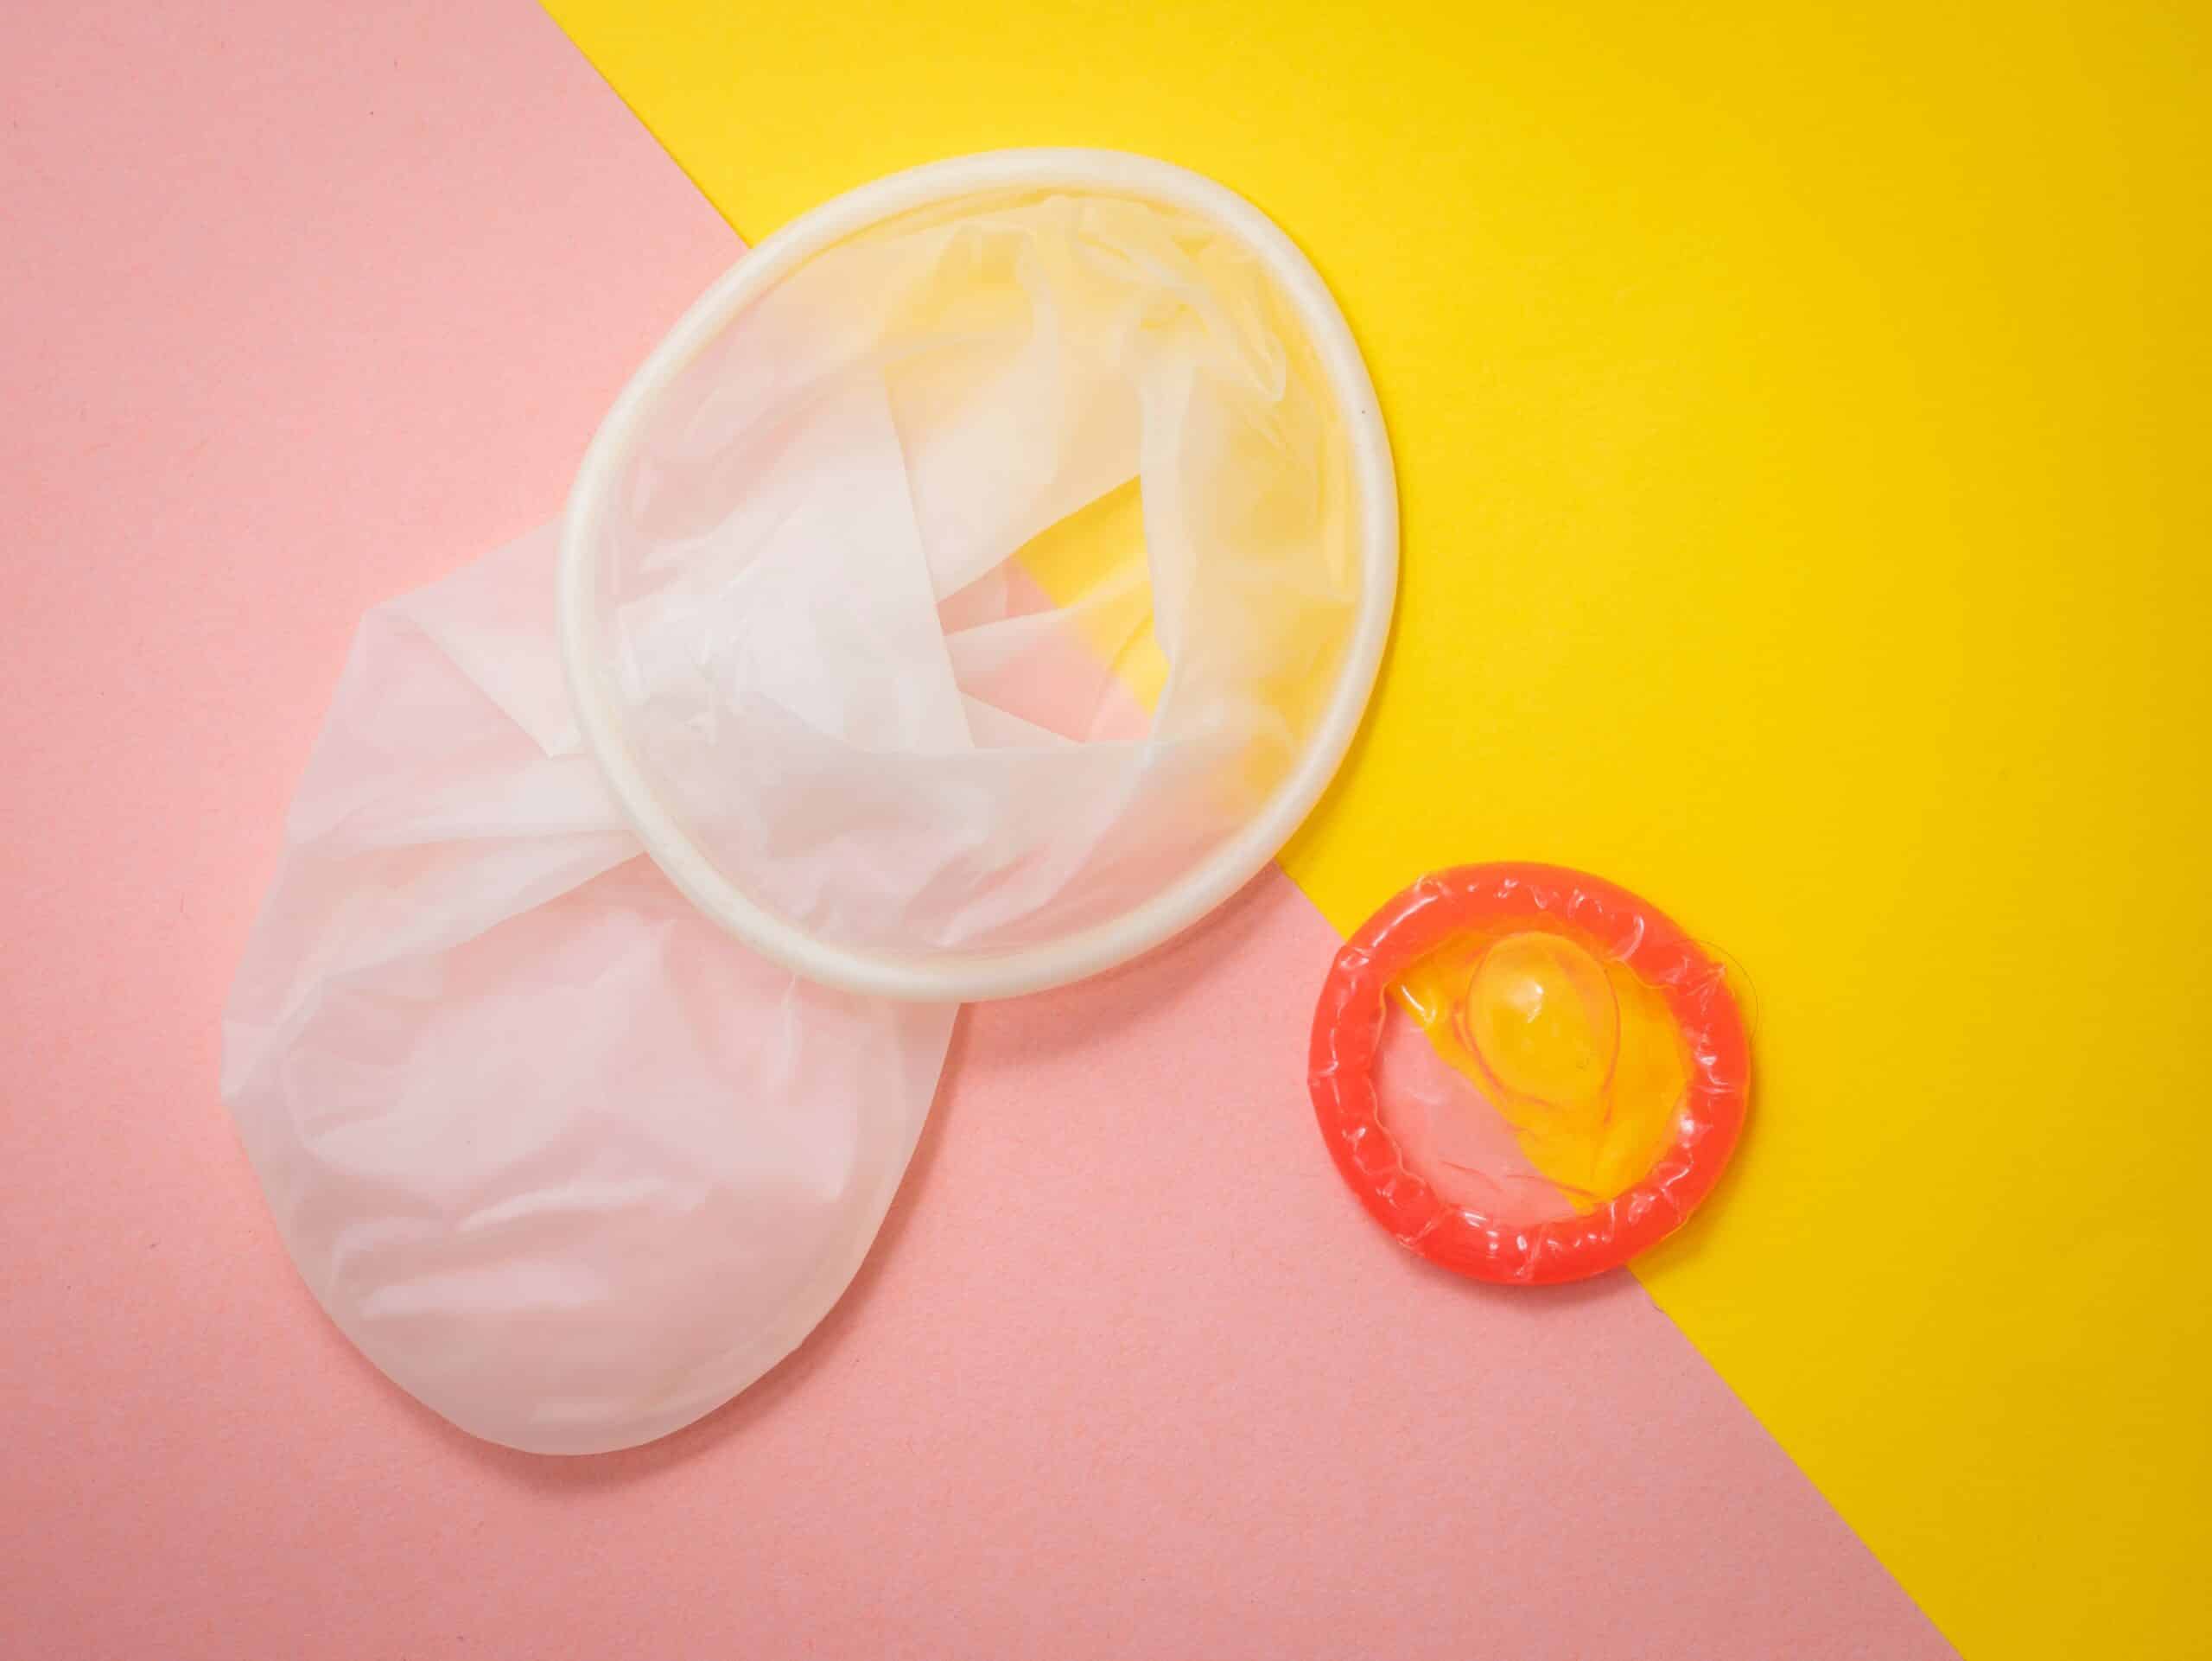 A condom and internal condom